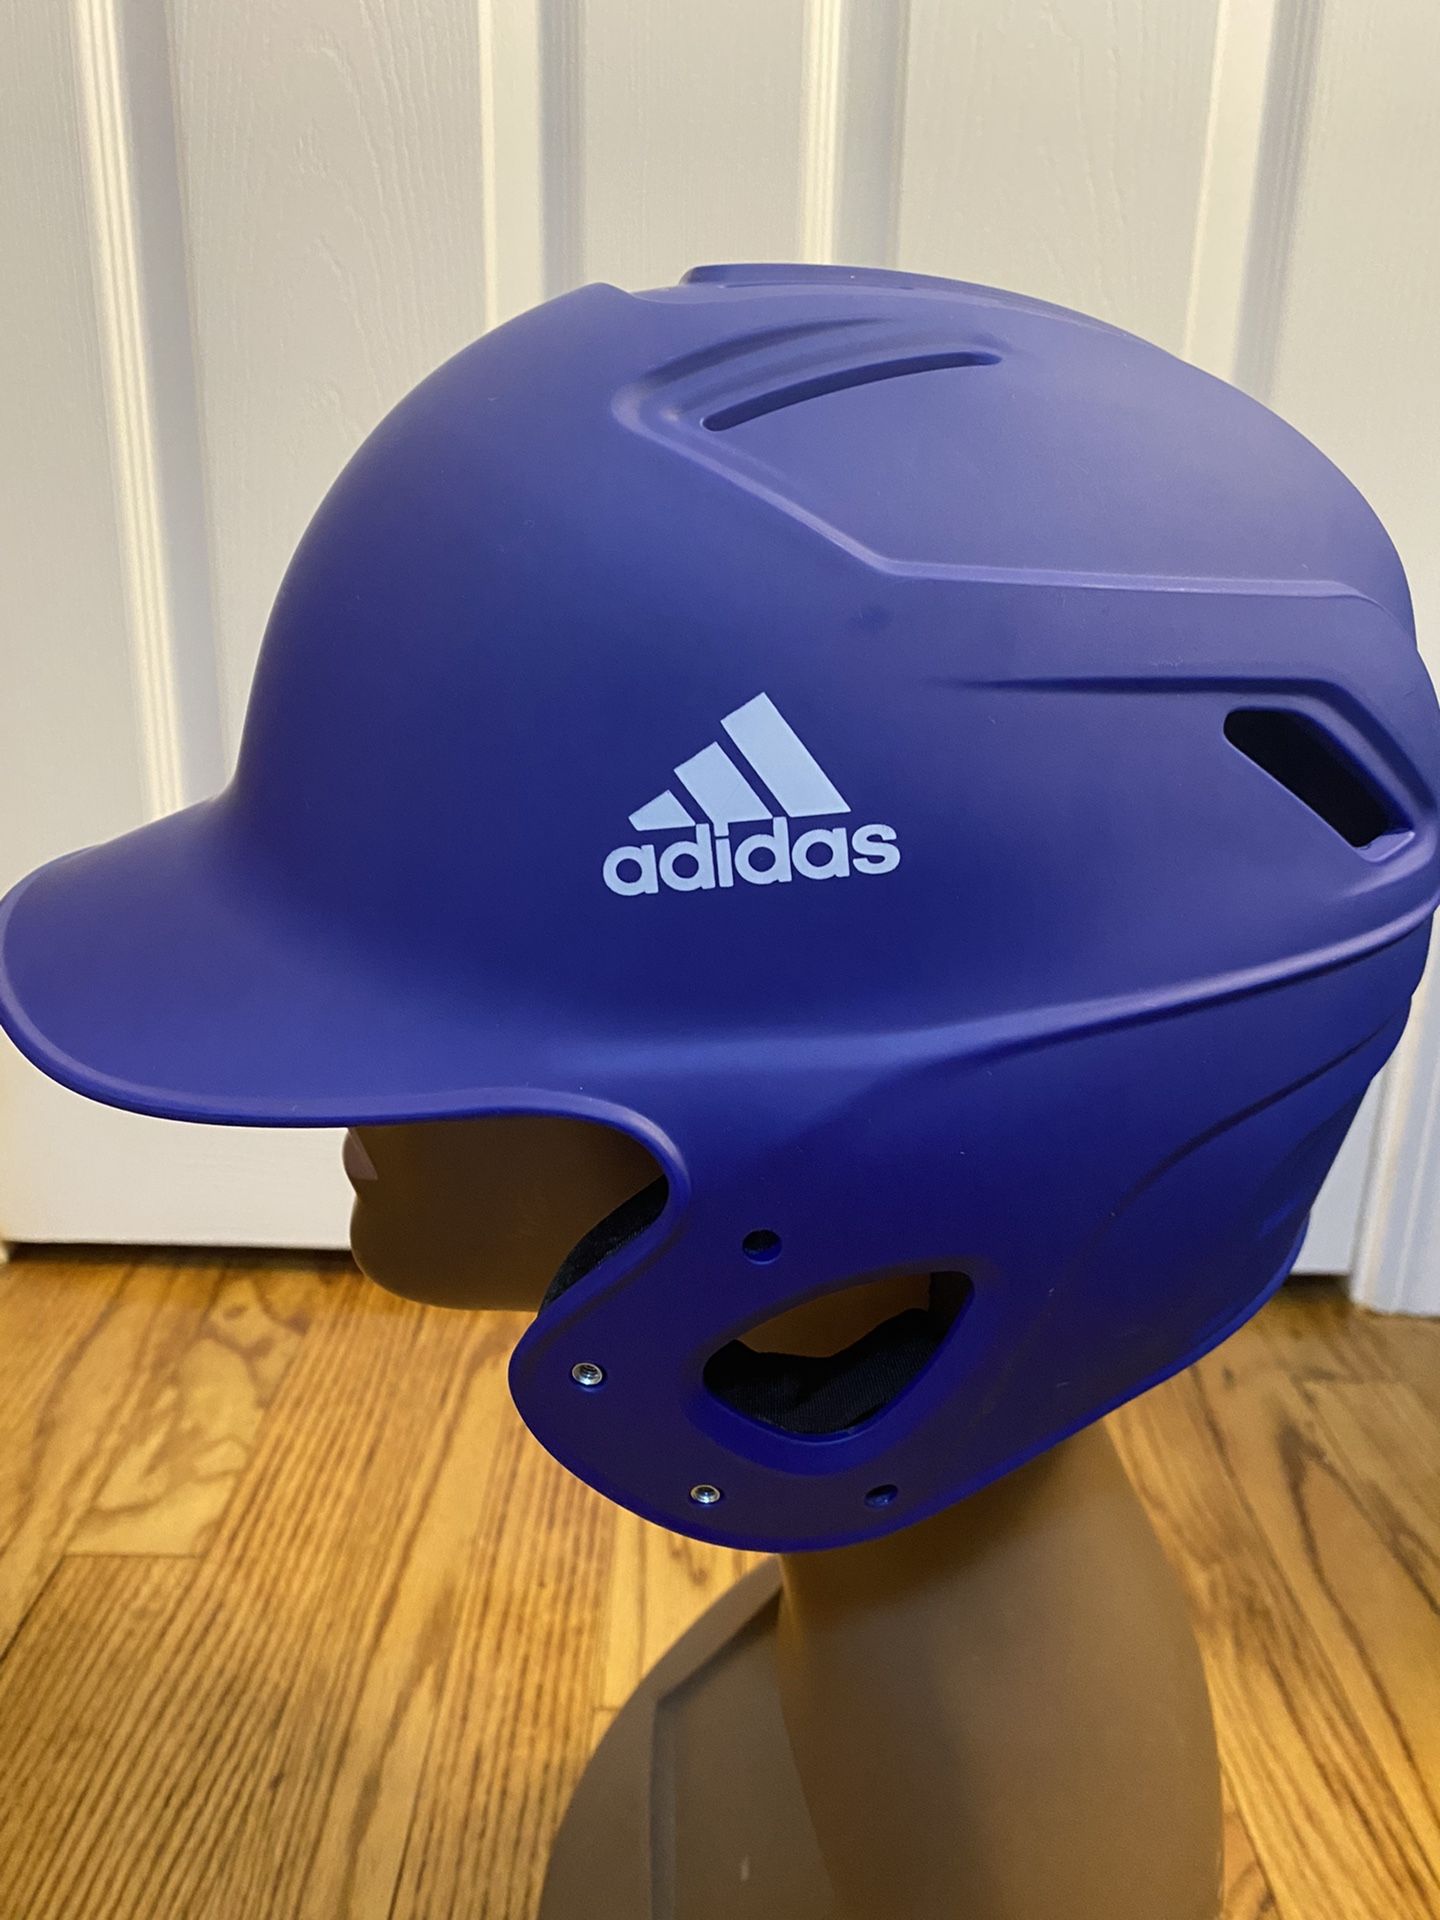 adidas Phenom Batting Helmet Baseball Gear matte royal blue new size L/XL- 2 available